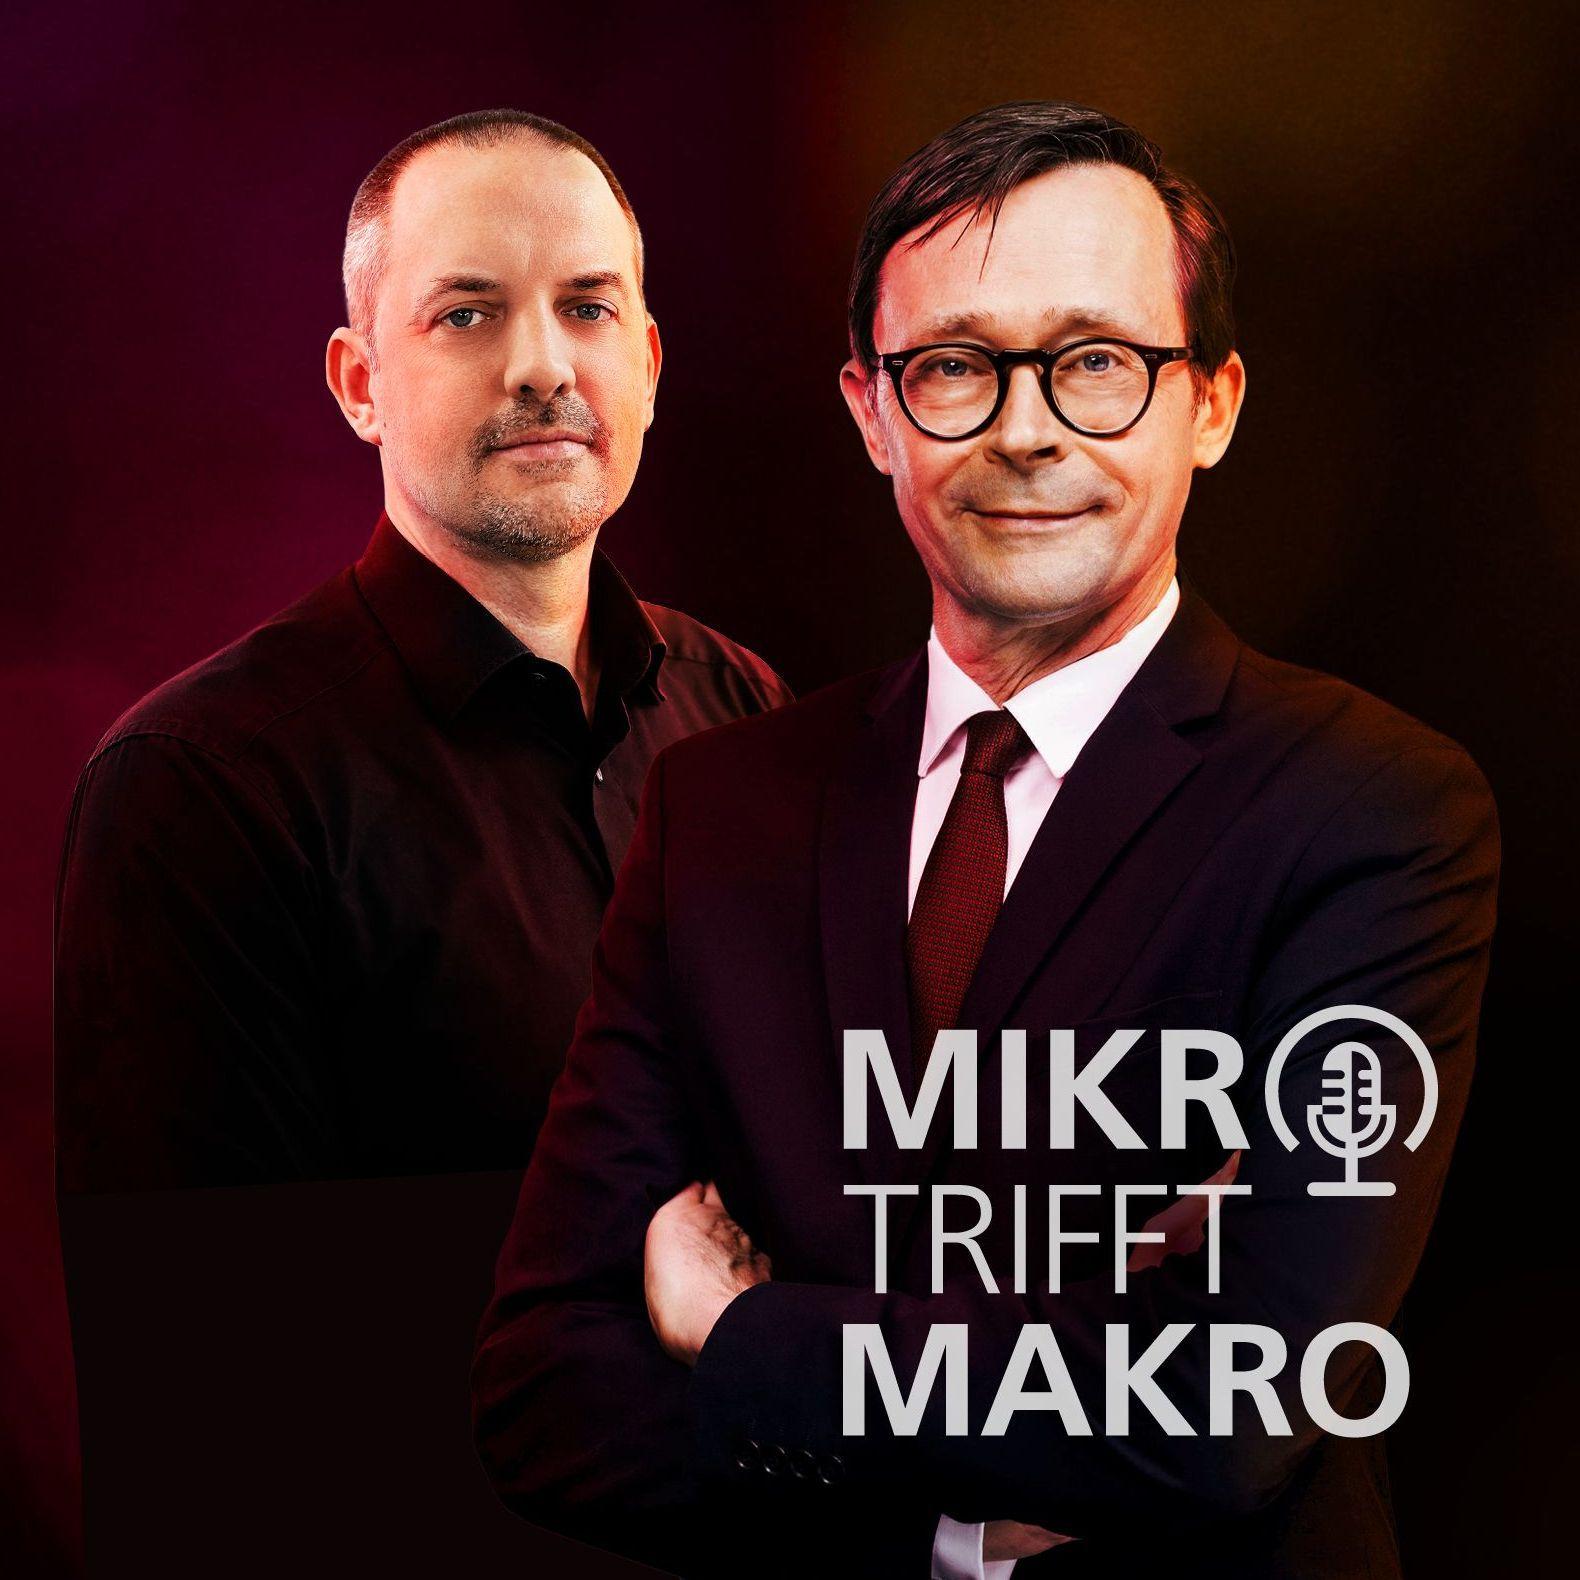 Mikro trifft Makro-Titelbild des Podcast